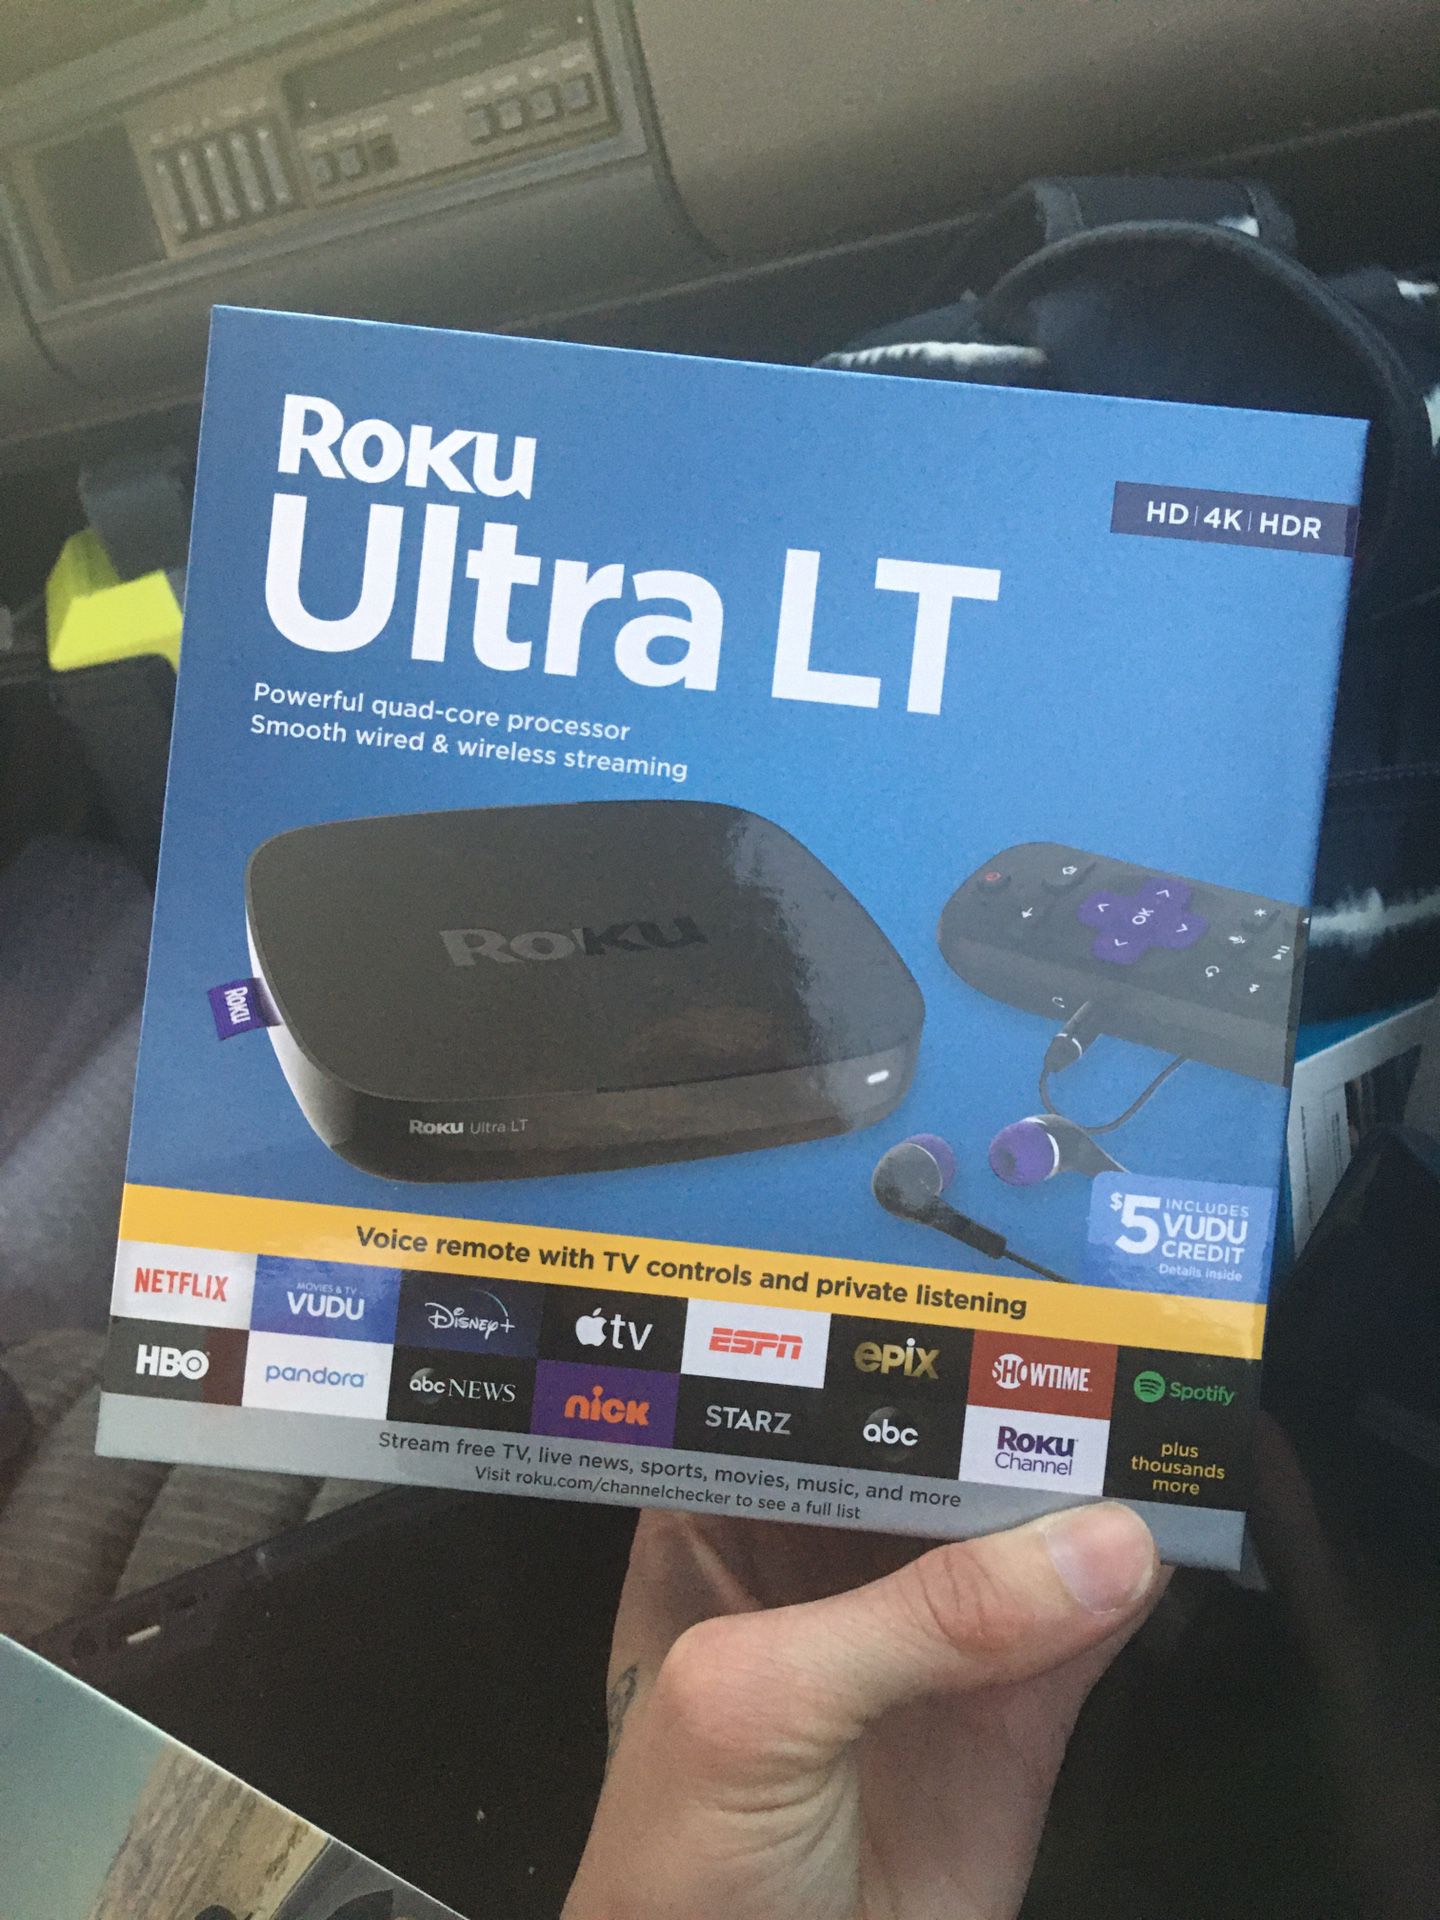 Roku Ultra Lt (new)